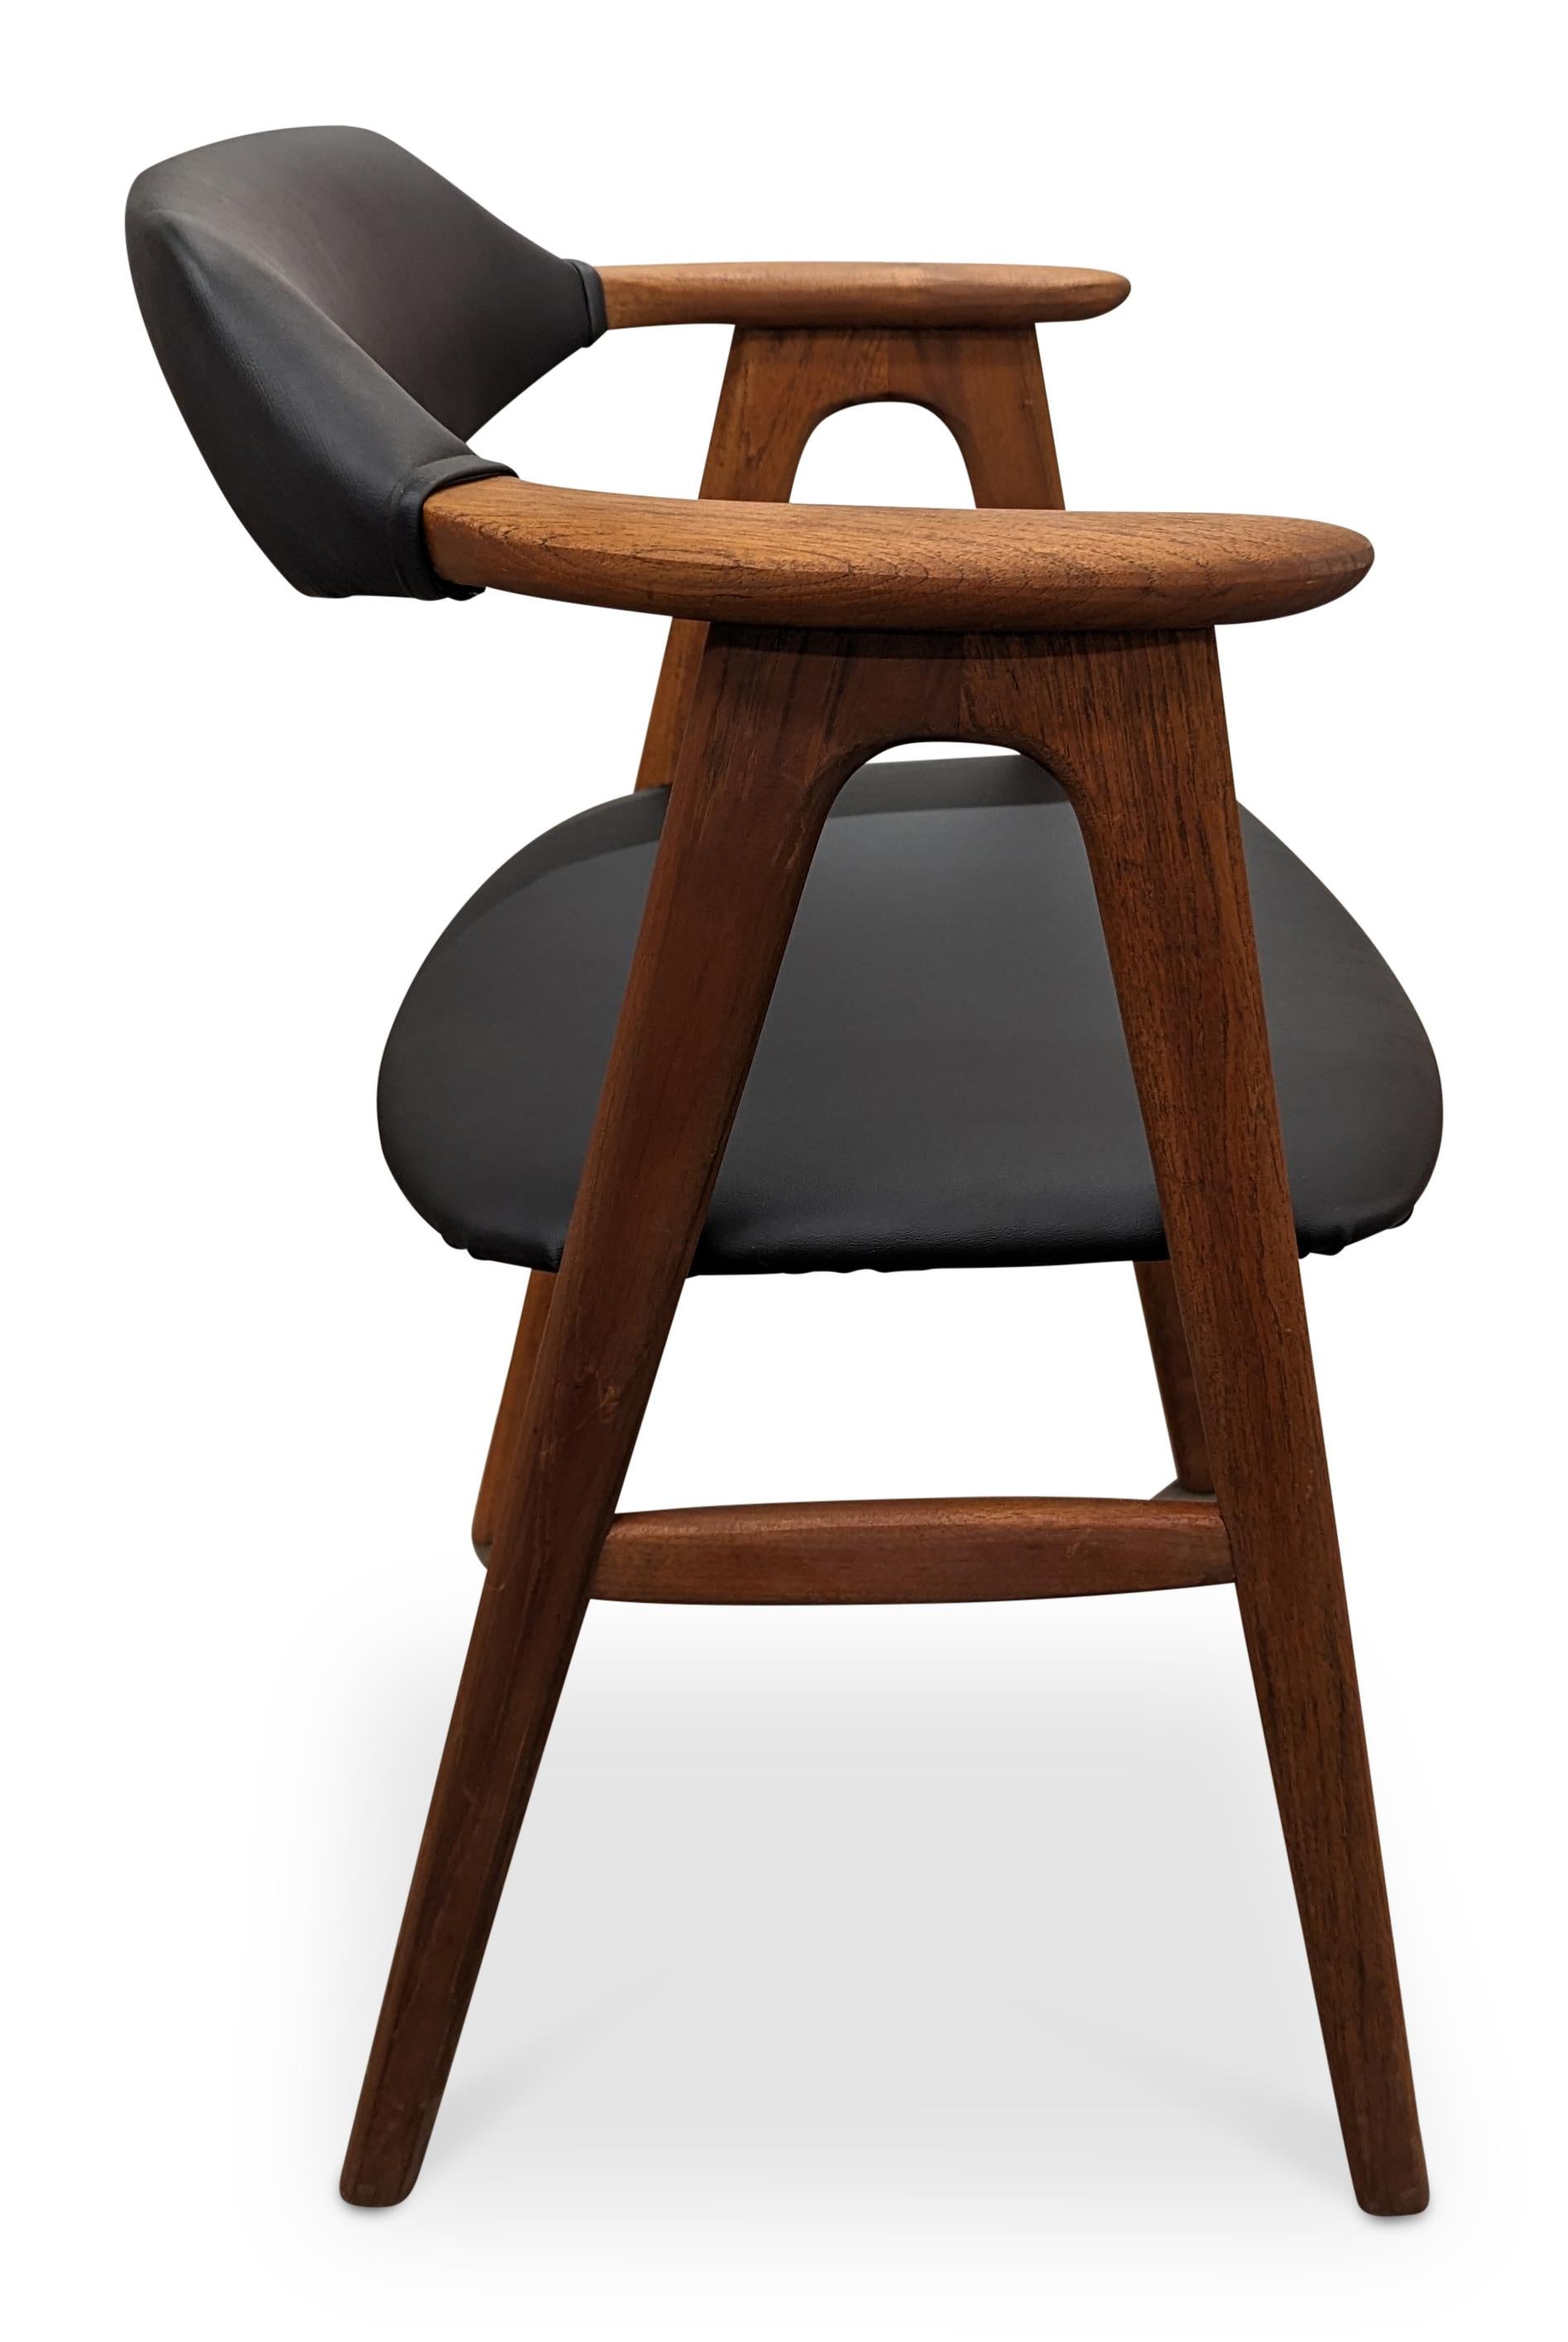  Vintage Danish Mid Century Erik Kirkegaard Arm Chair - 022430 In Good Condition For Sale In Jersey City, NJ